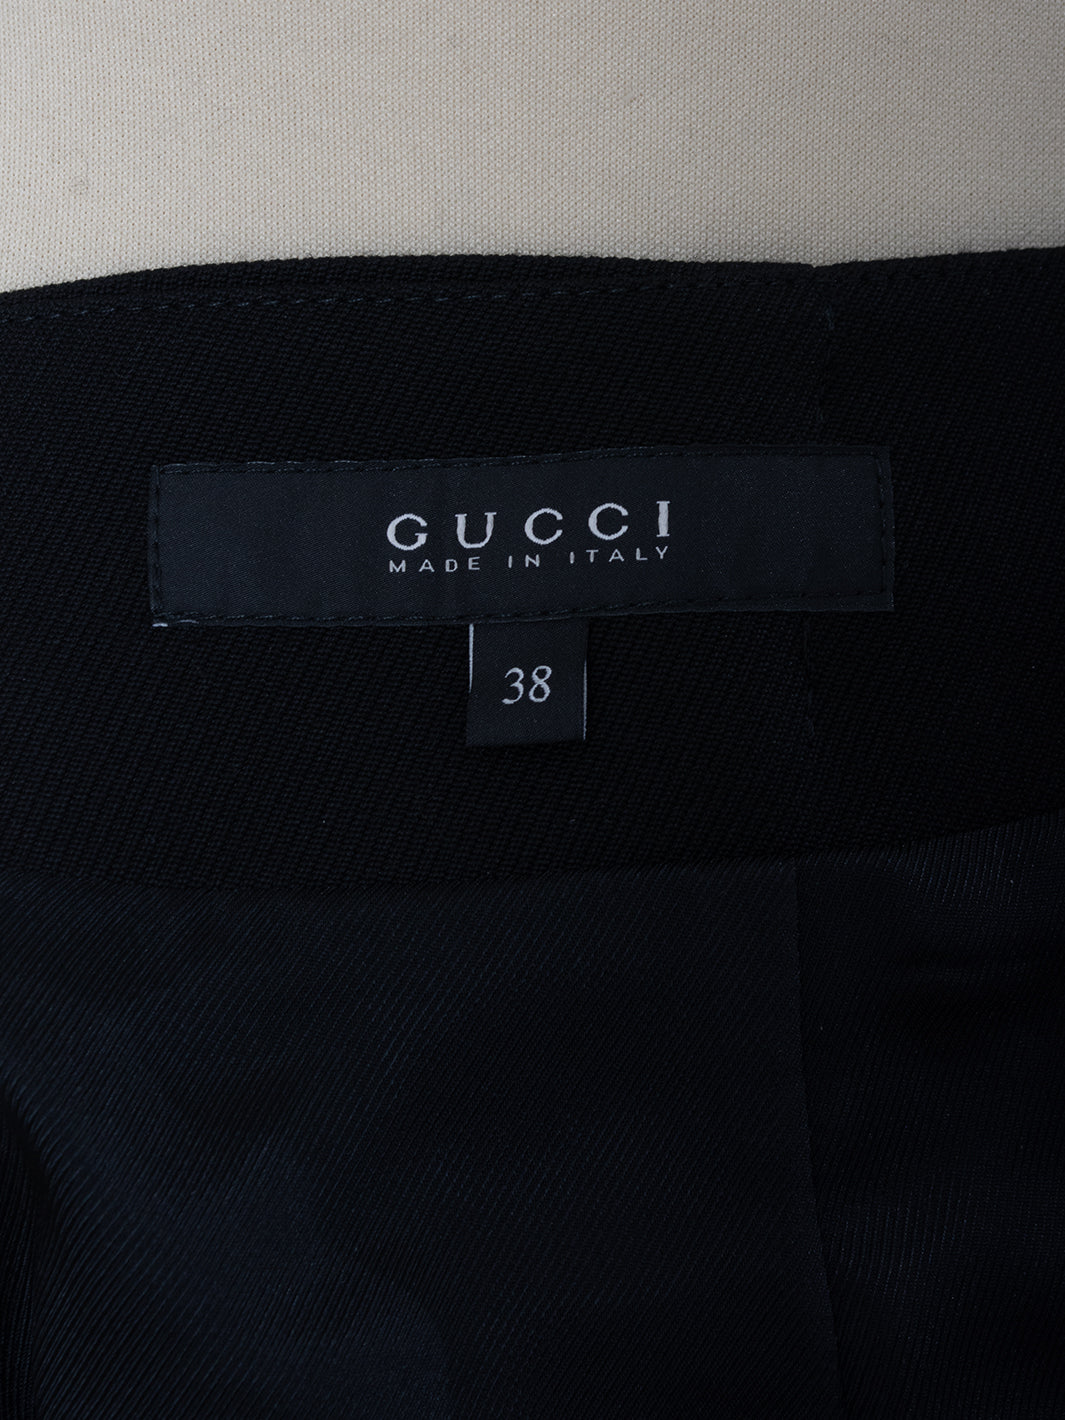 Gucci Black Skirt